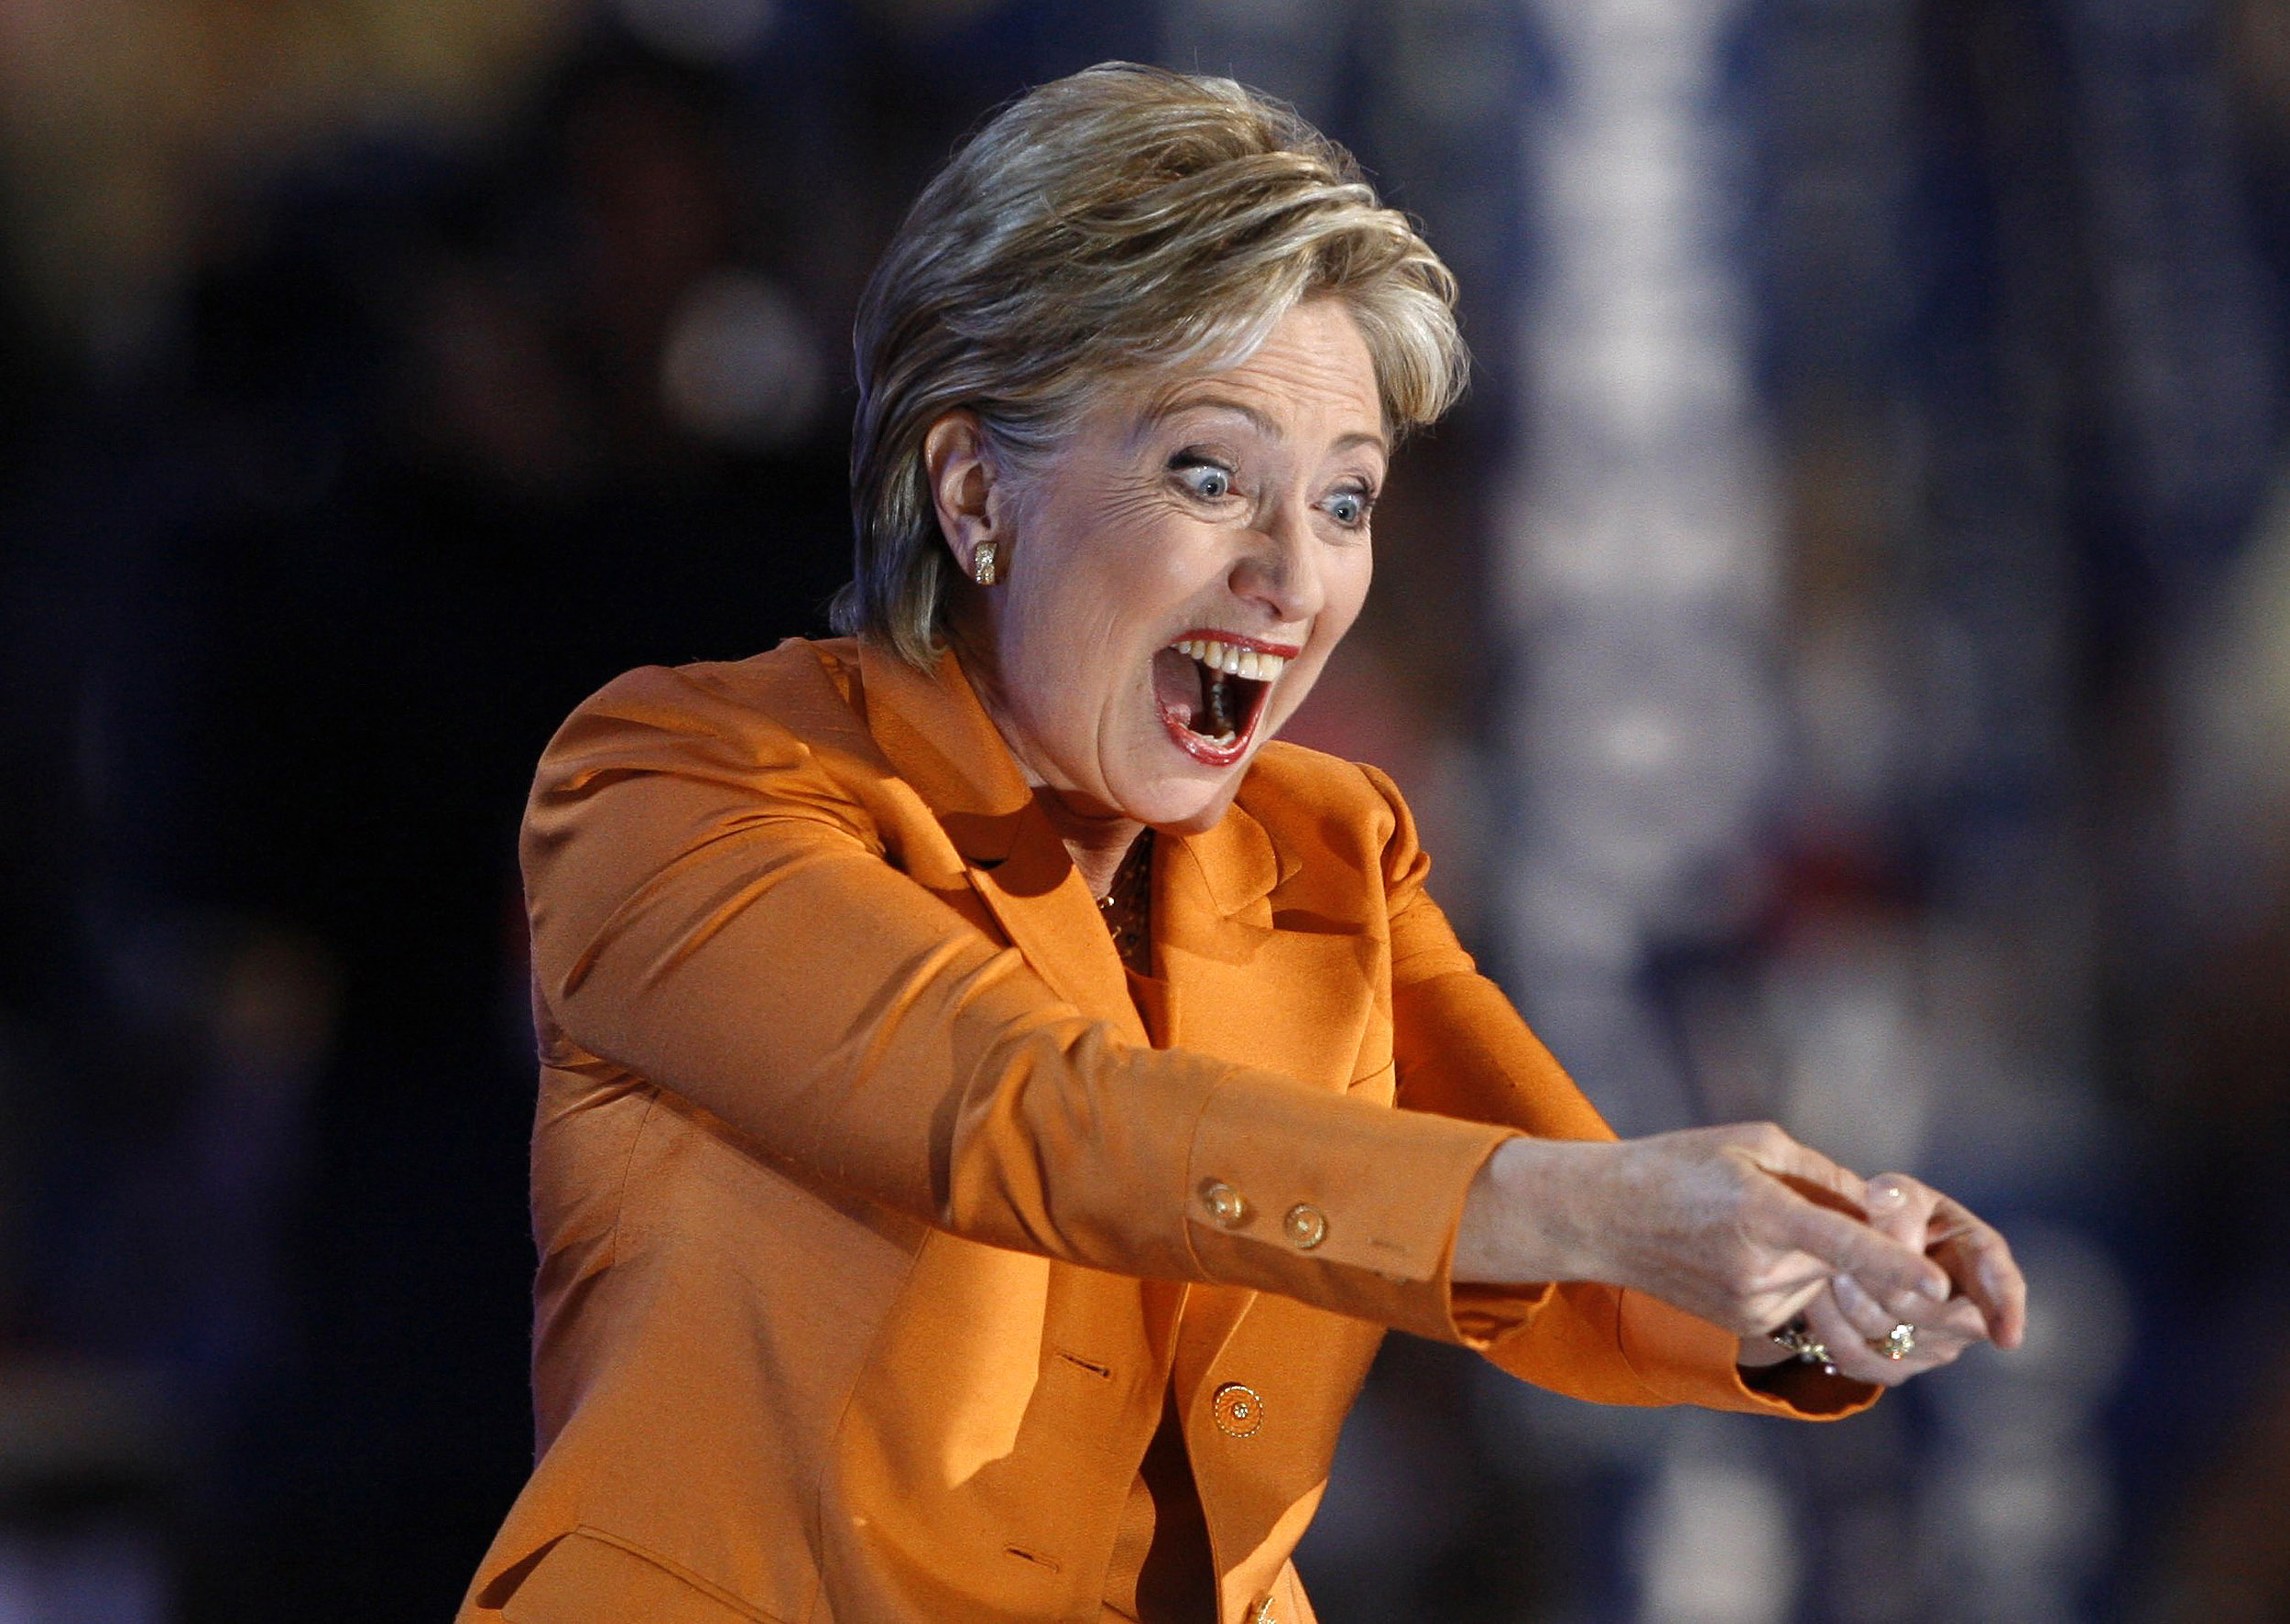 Image: Criminal Politician Clinton Won 6 Coin Flips To Take Iowa